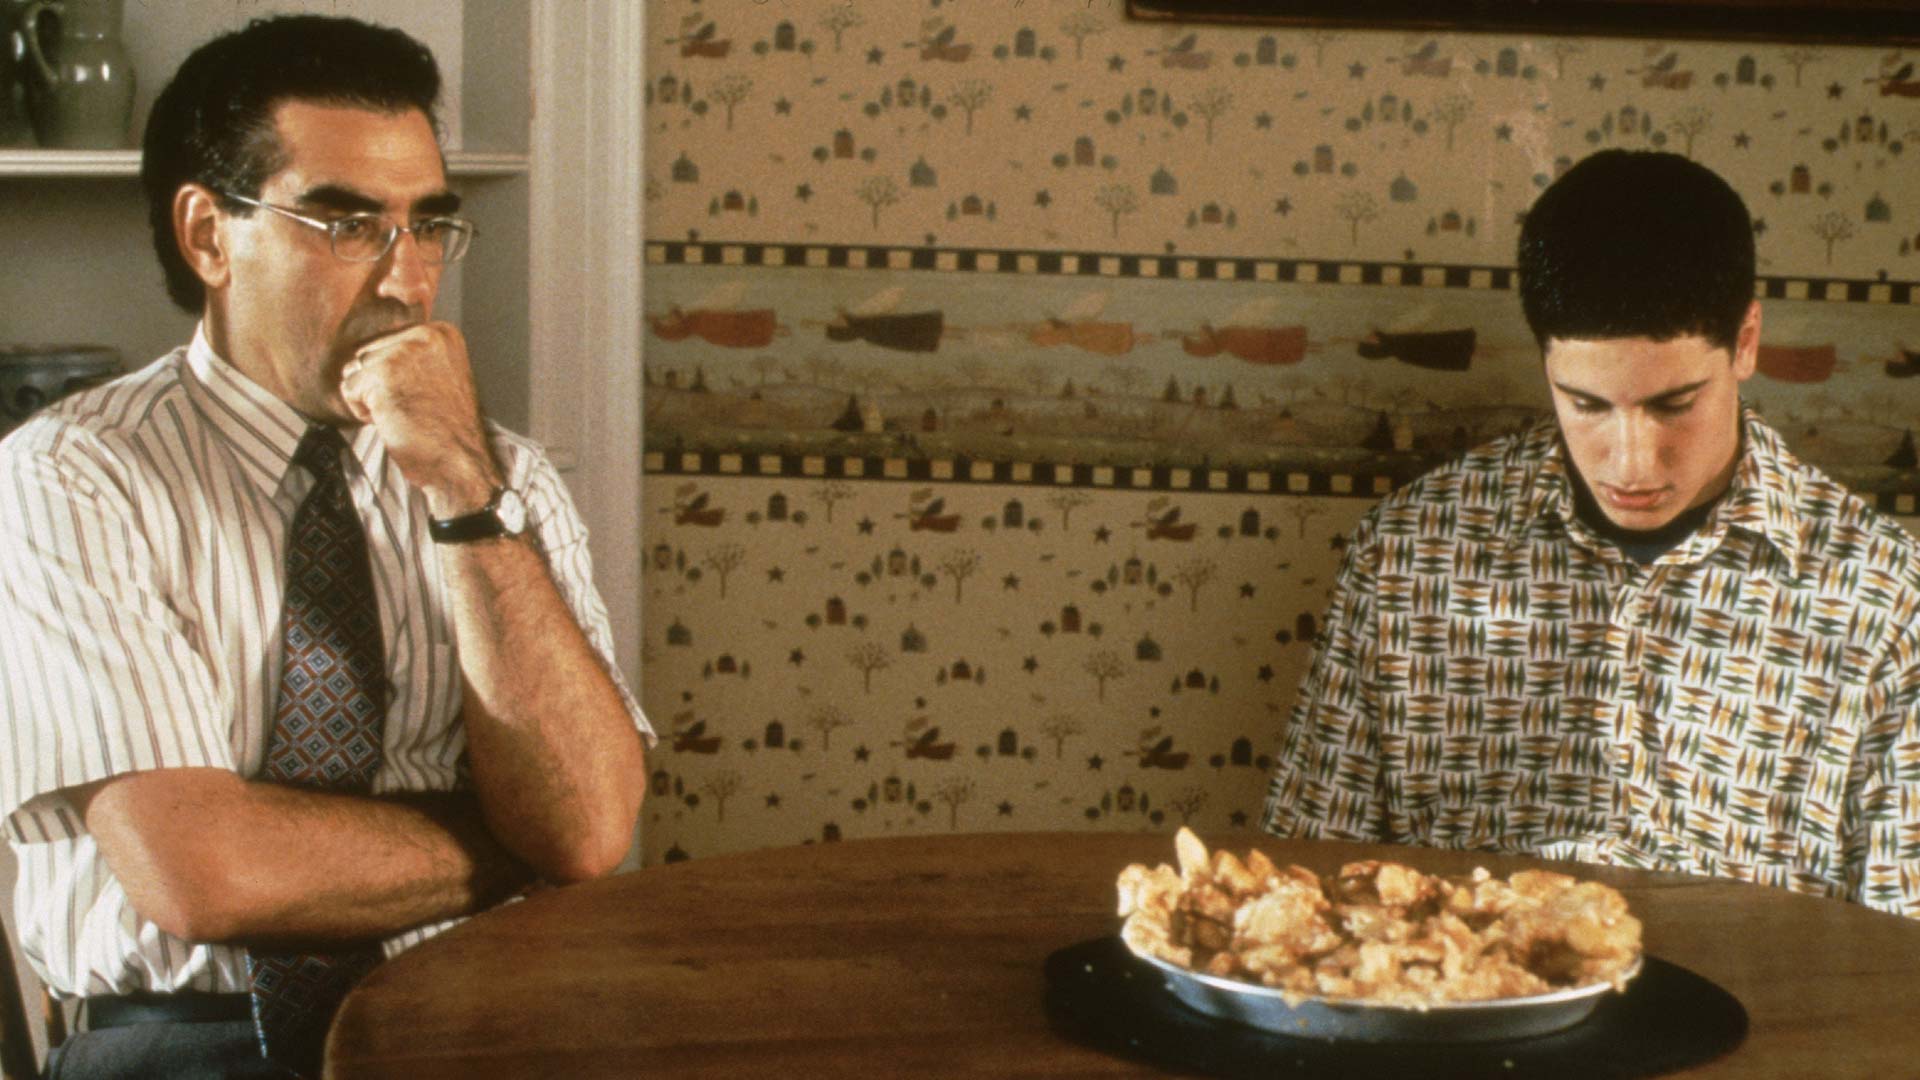 American Pie Sekarang Berusia 20 Tahun: Boy Does Time Fly